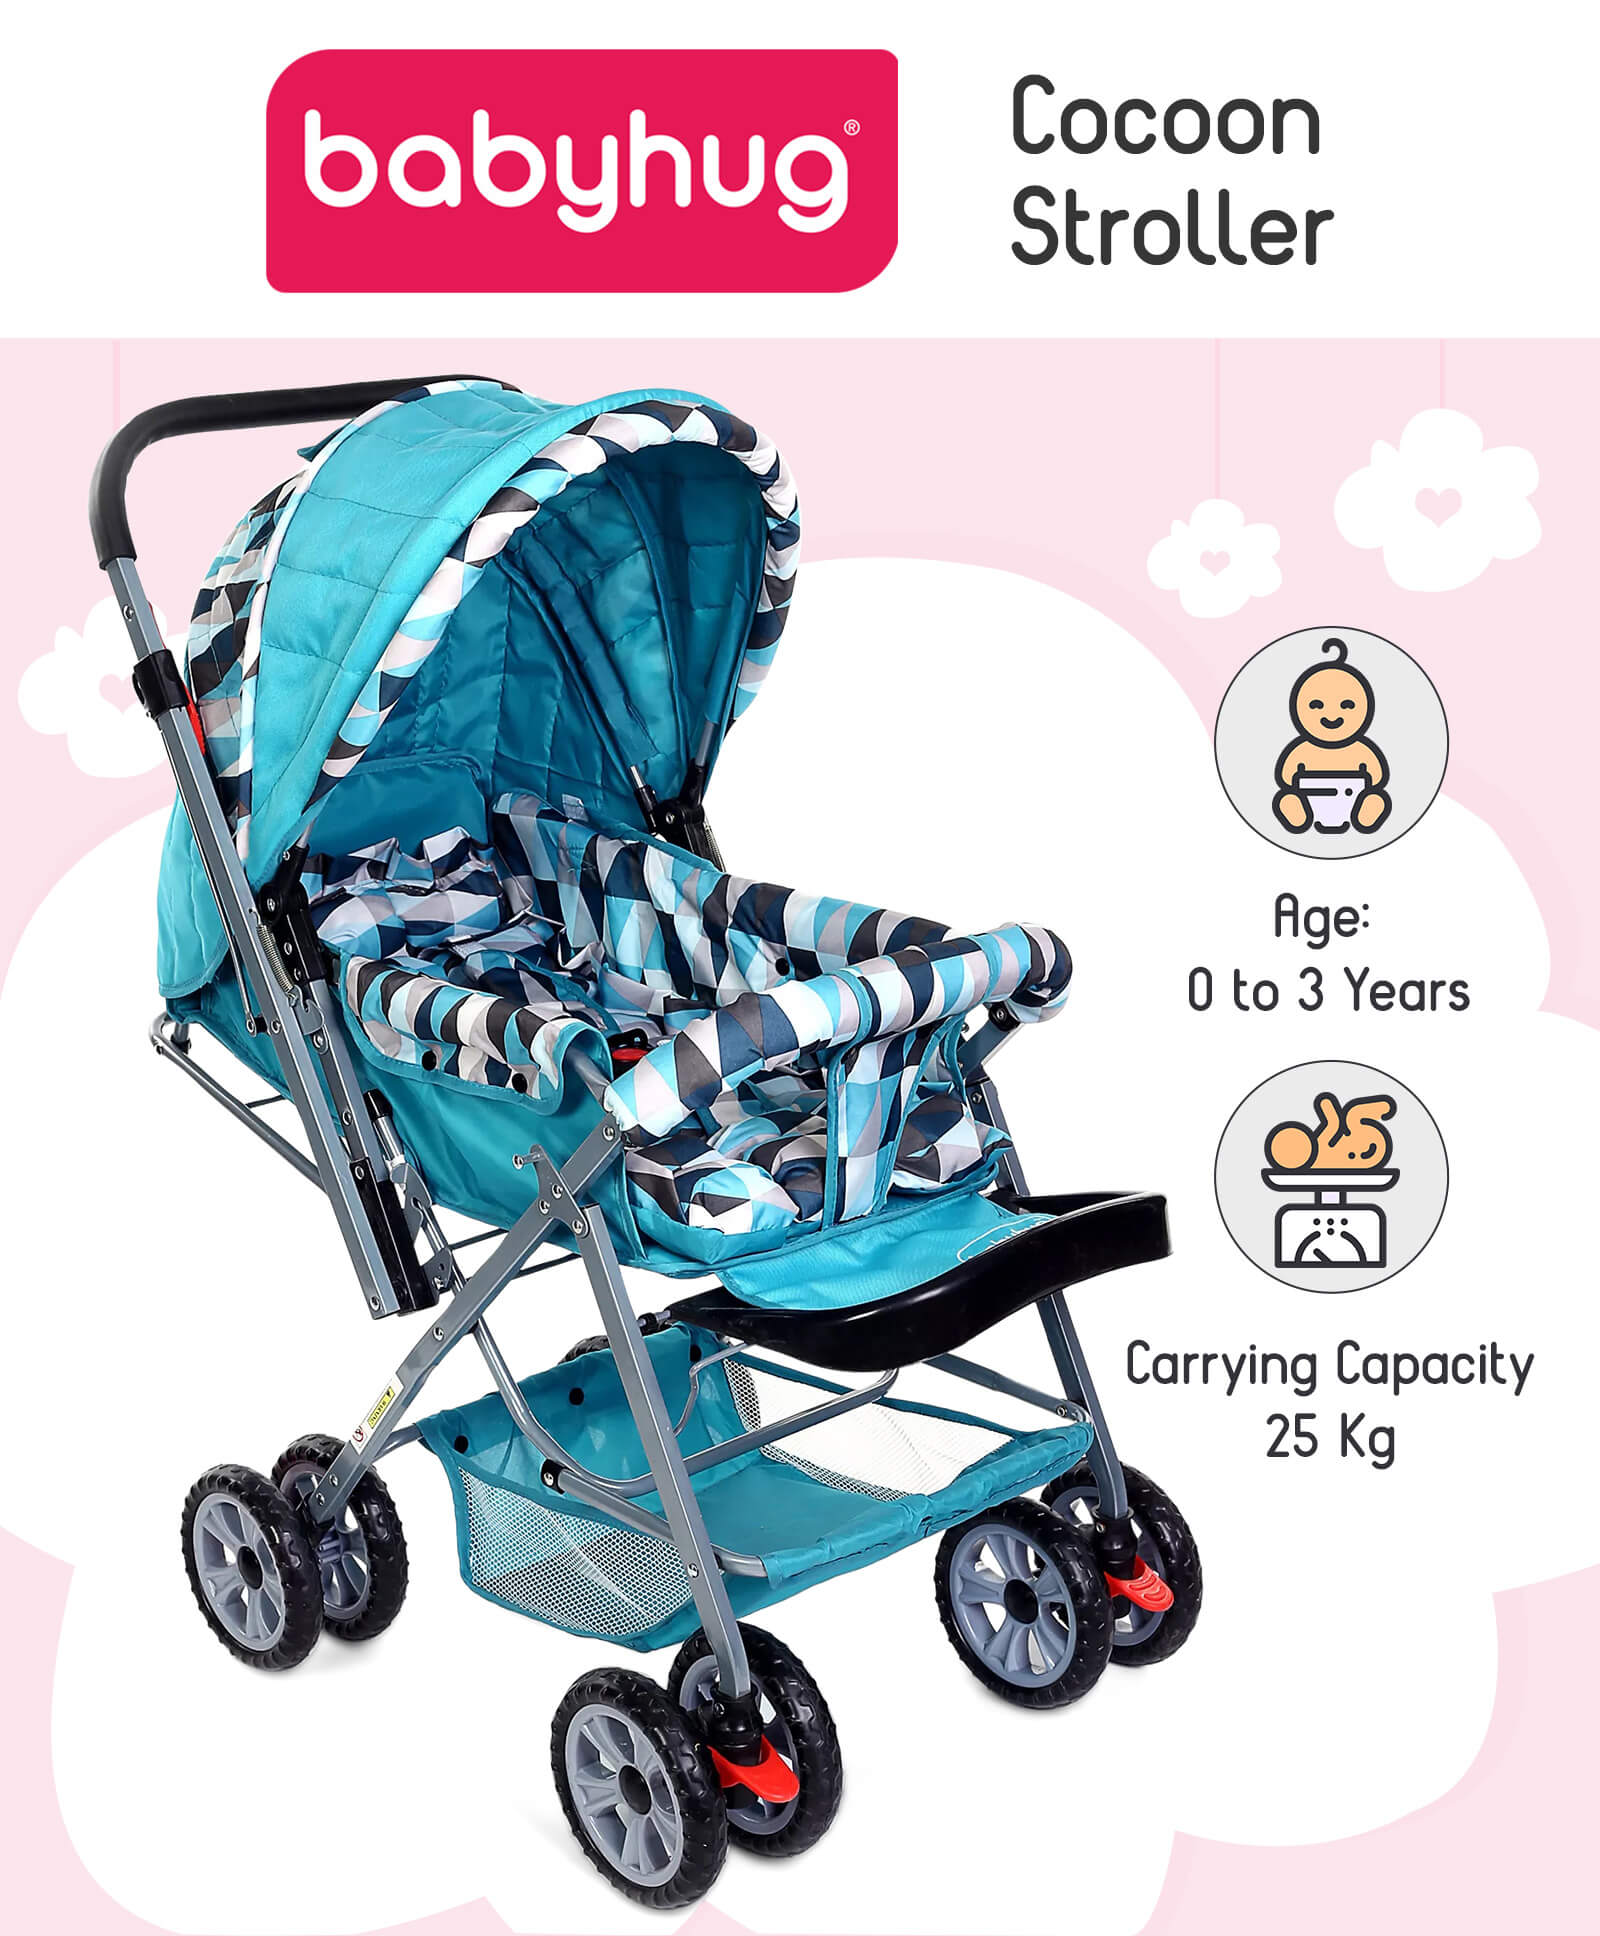 baby hug stroller